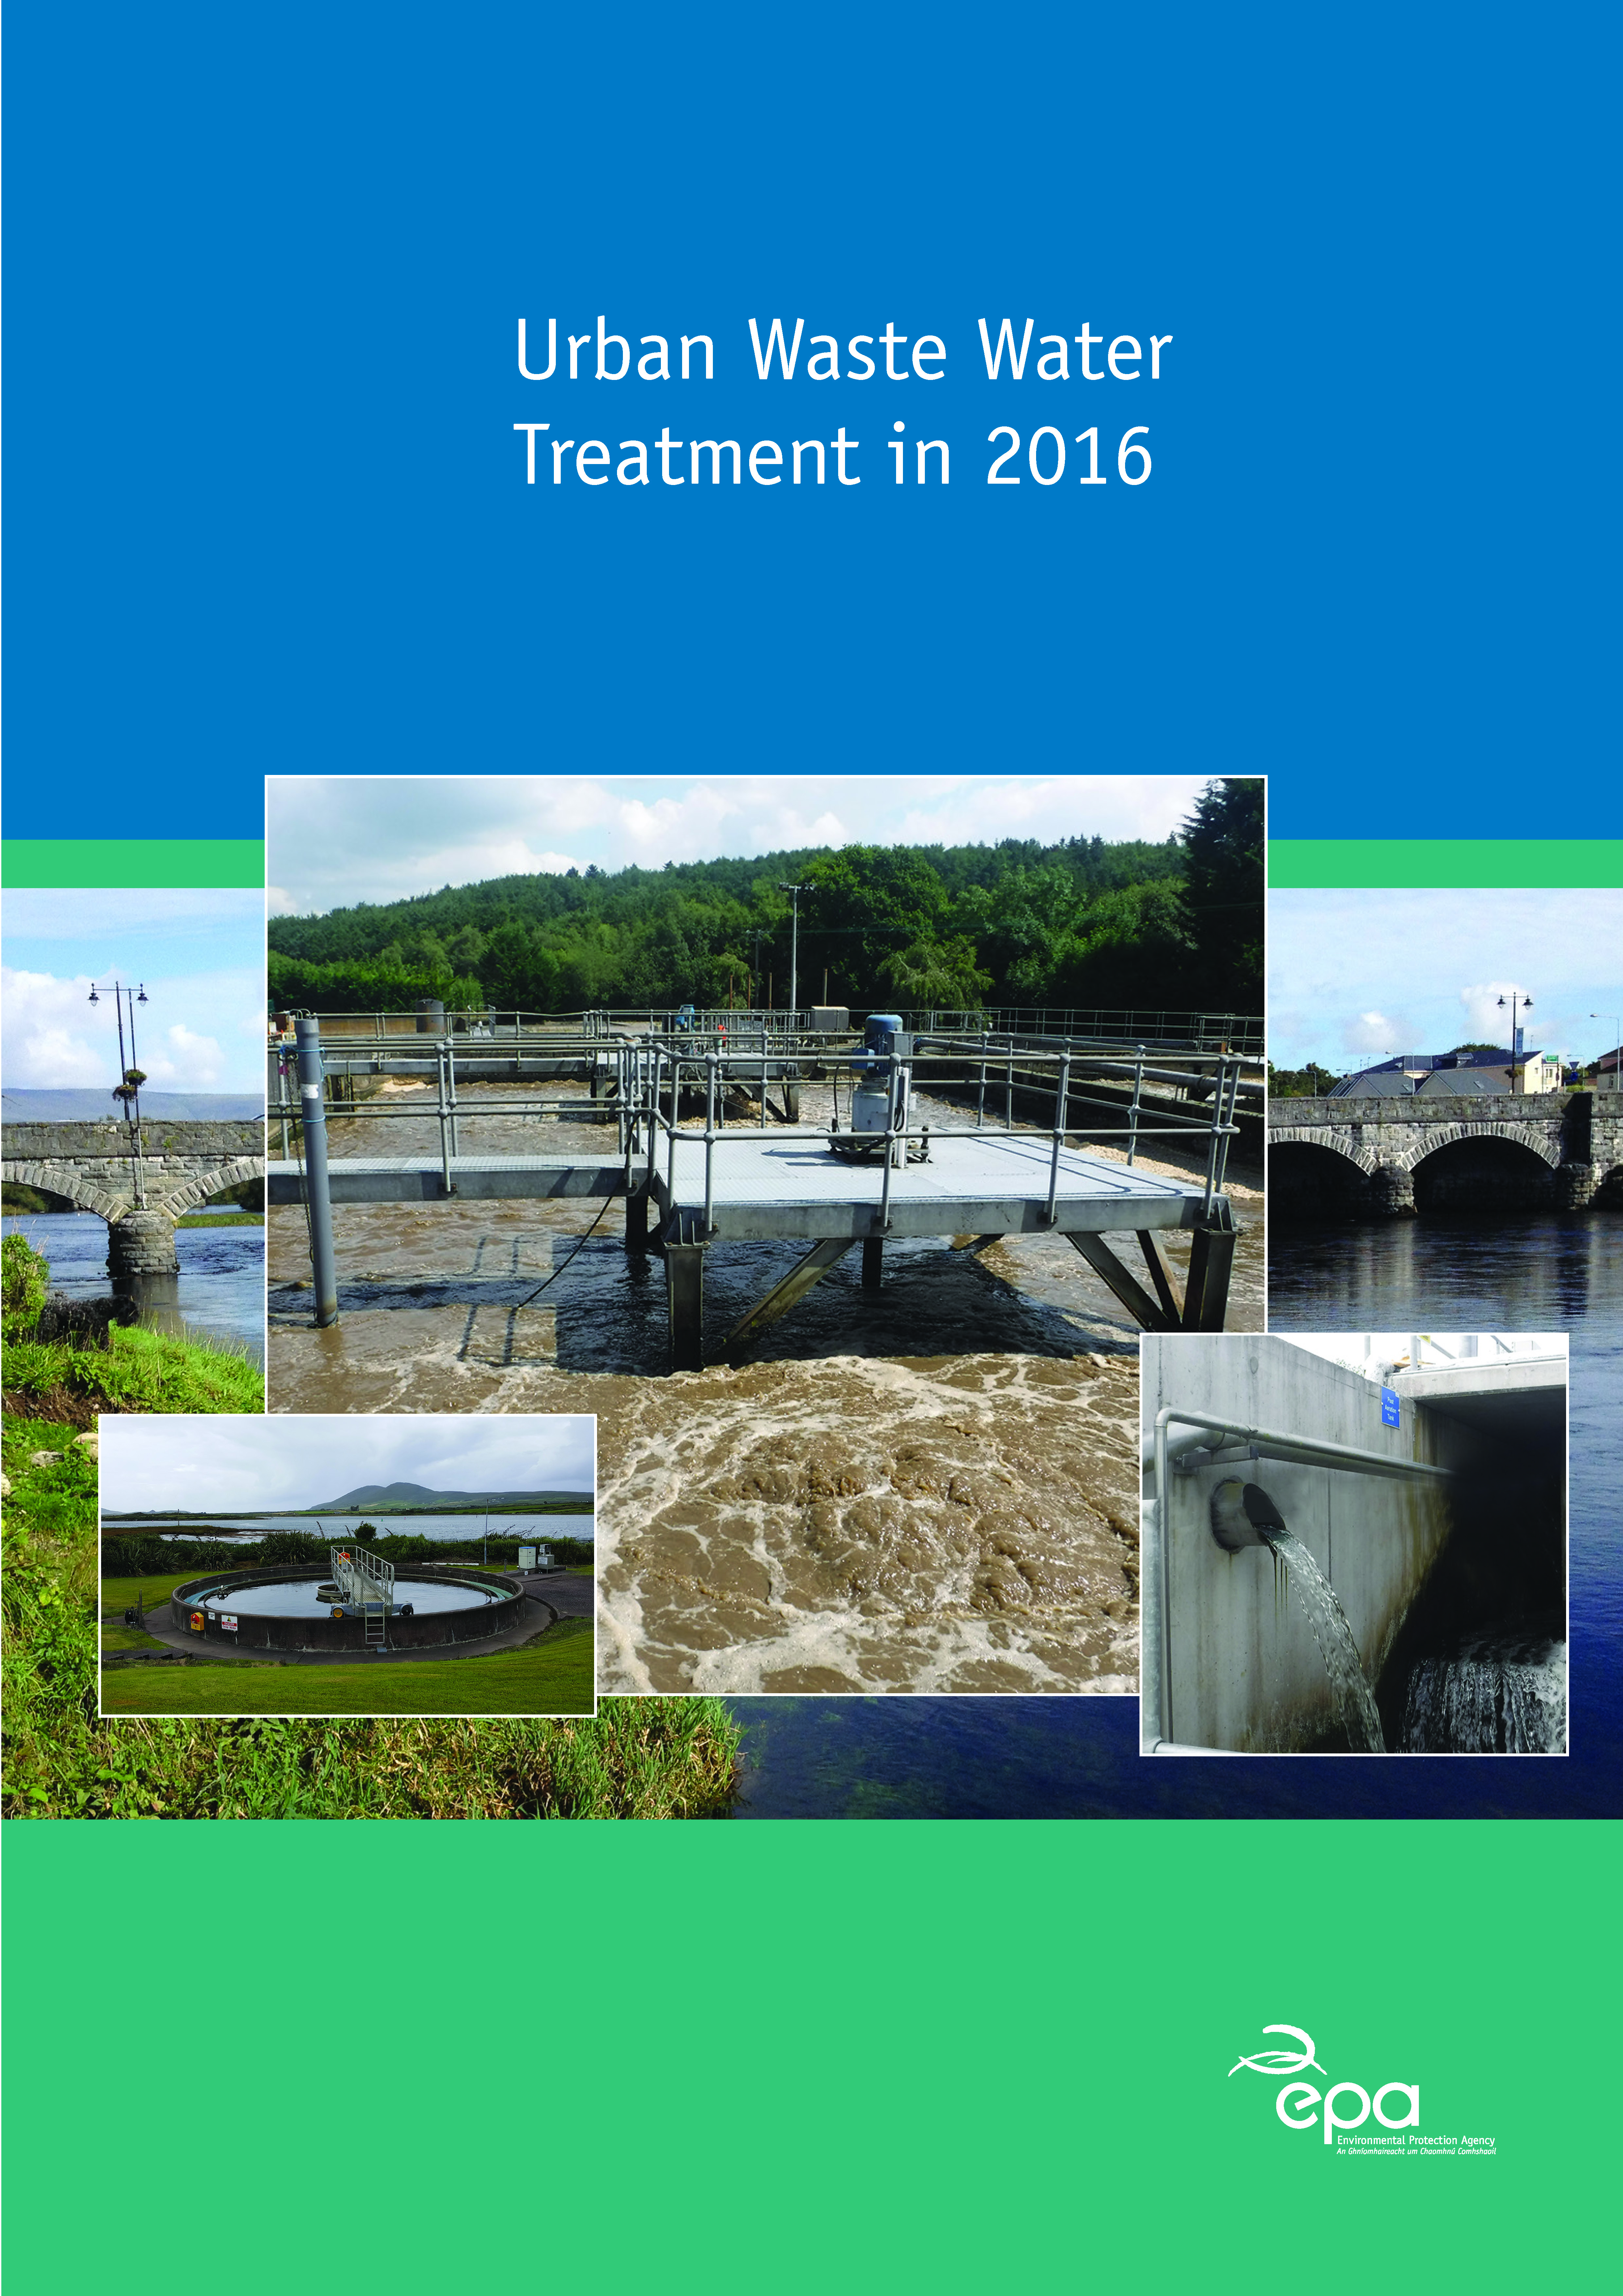 Urban Waste Water in 2016